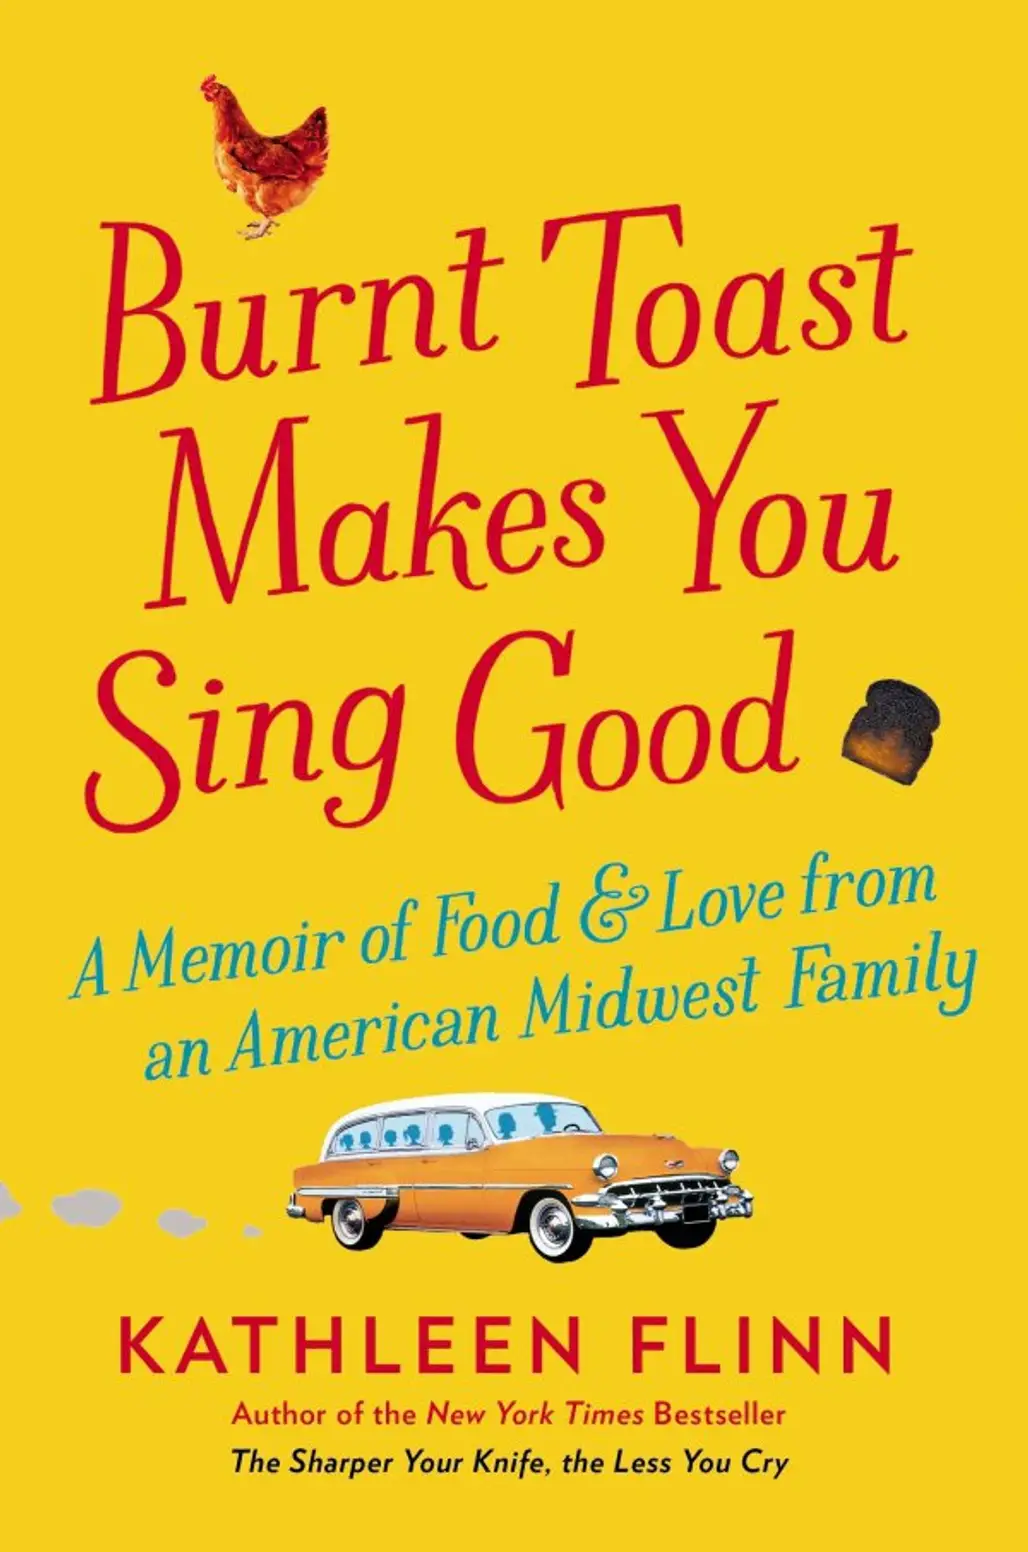 "Burnt Toast Makes You Sing Good" by Kathleen Finn